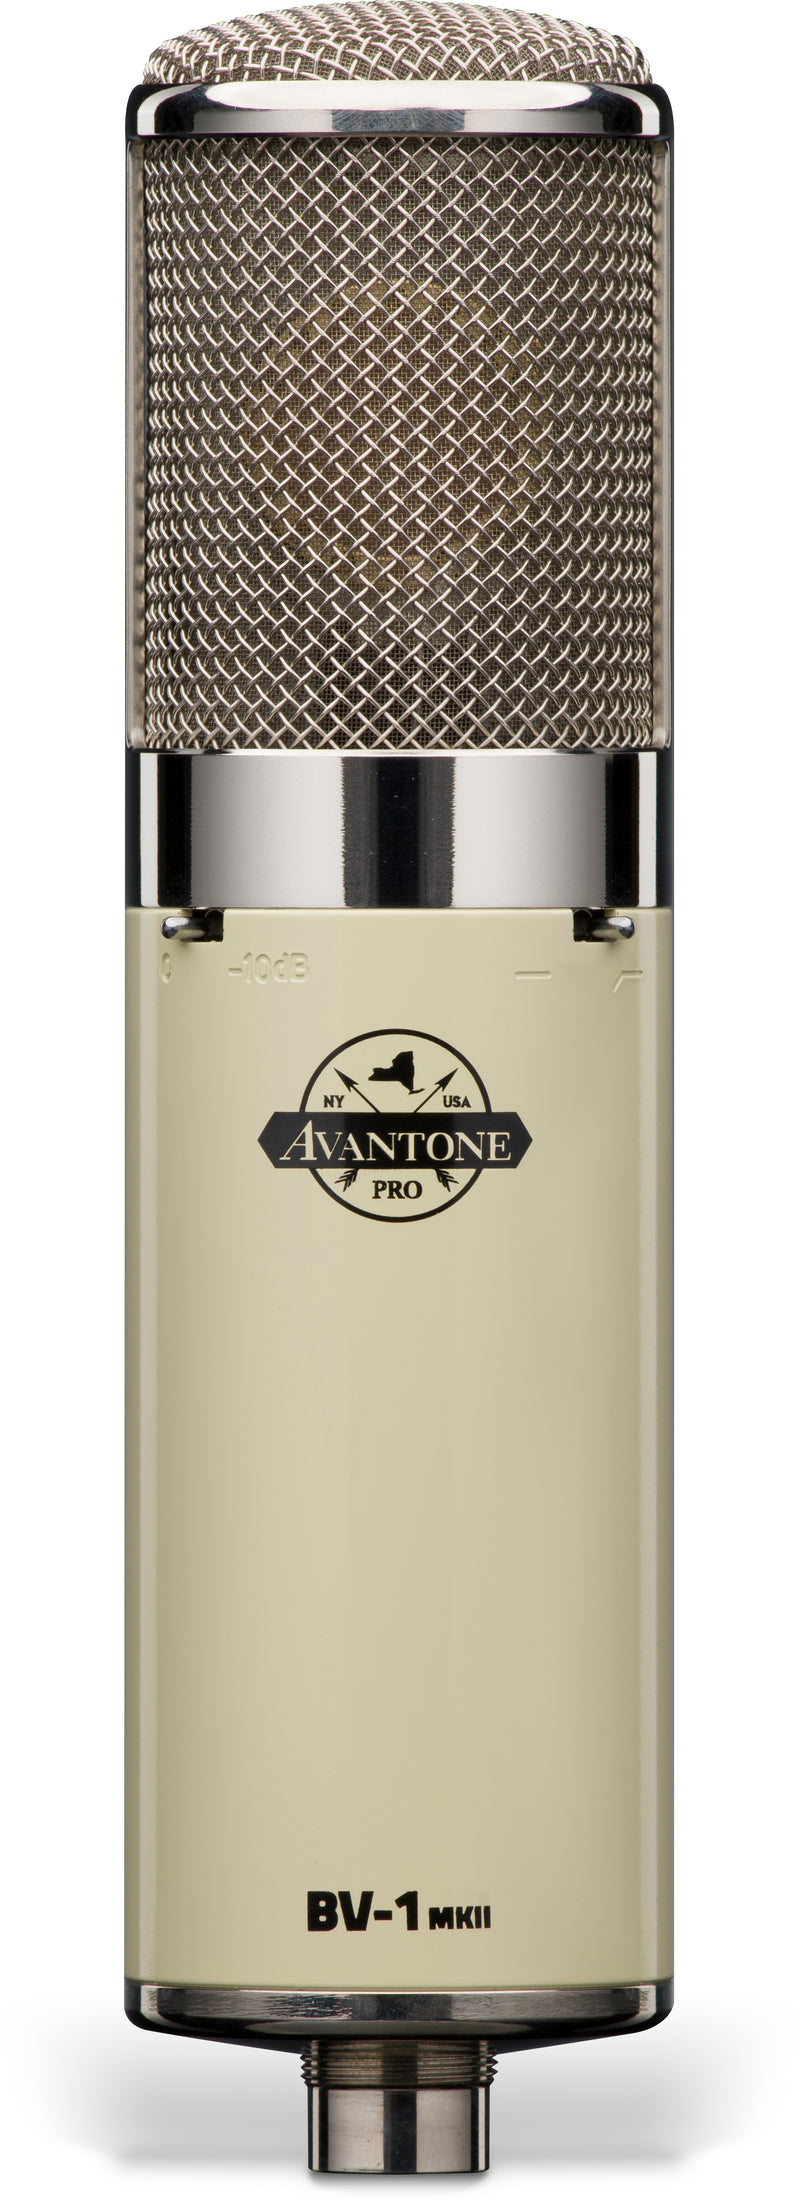 New Avantone Pro BV-1 MKII Large diaphragm Microphone